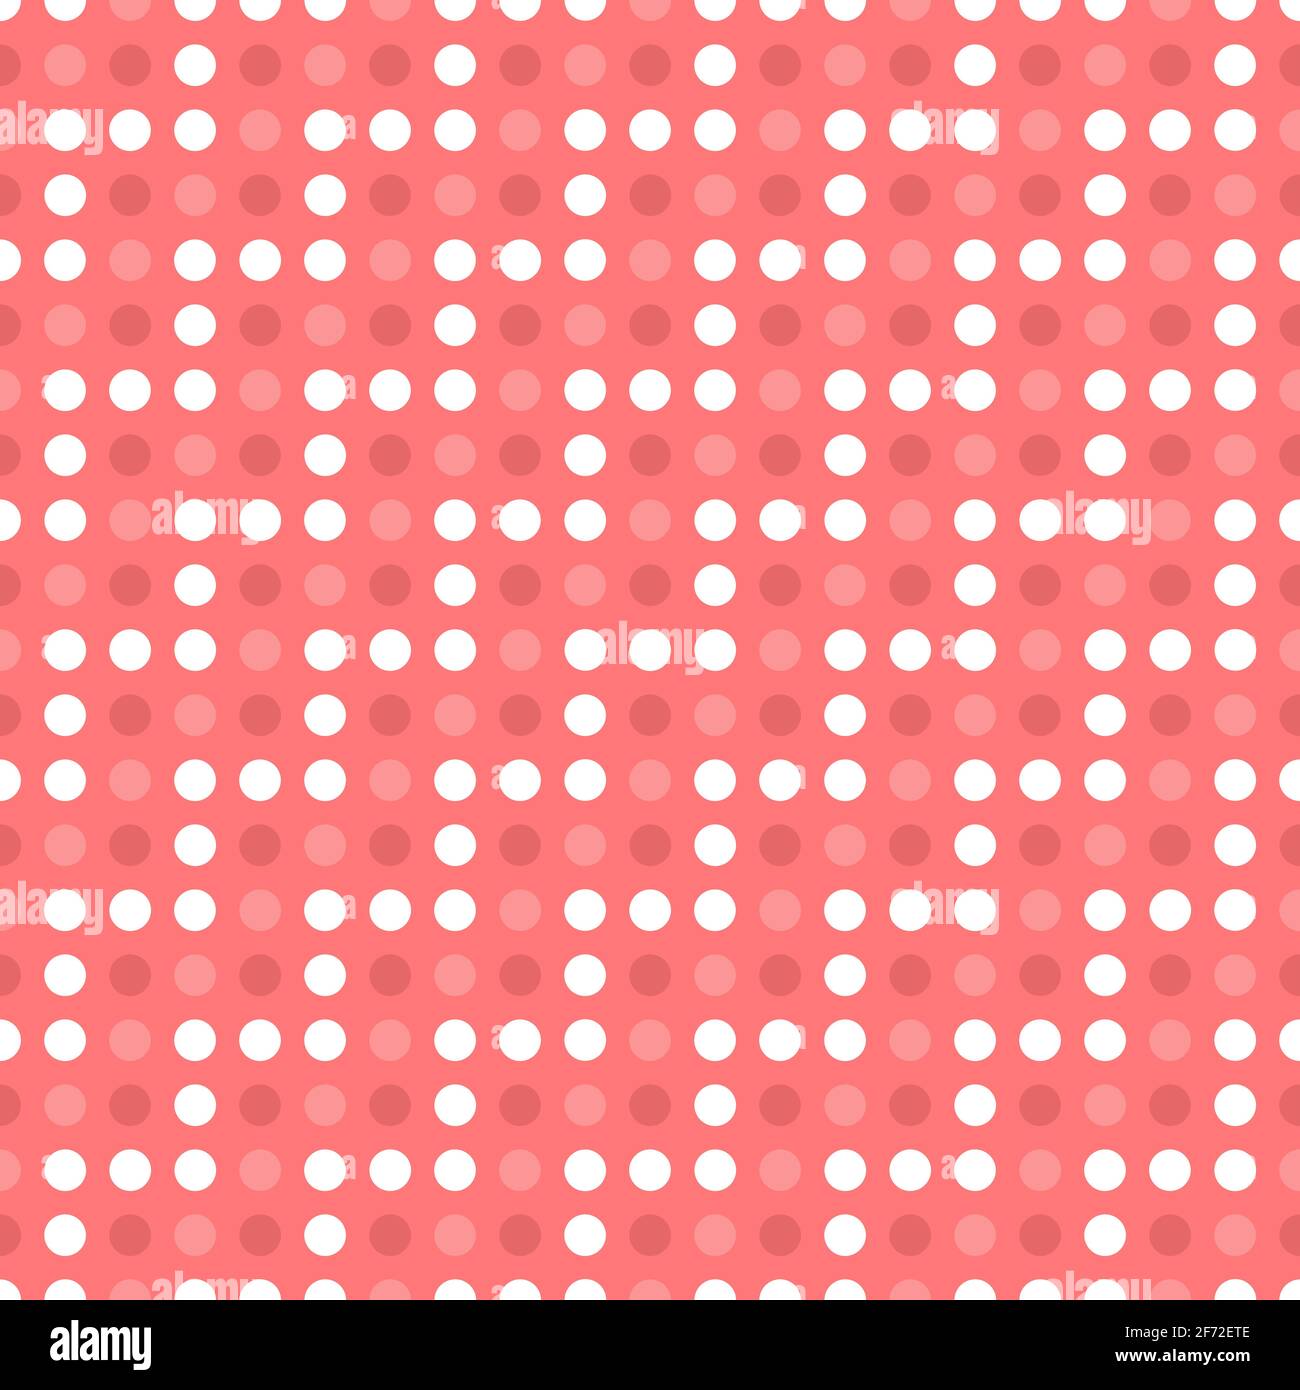 Matrix polka dots in coral pink tones Stock Vector